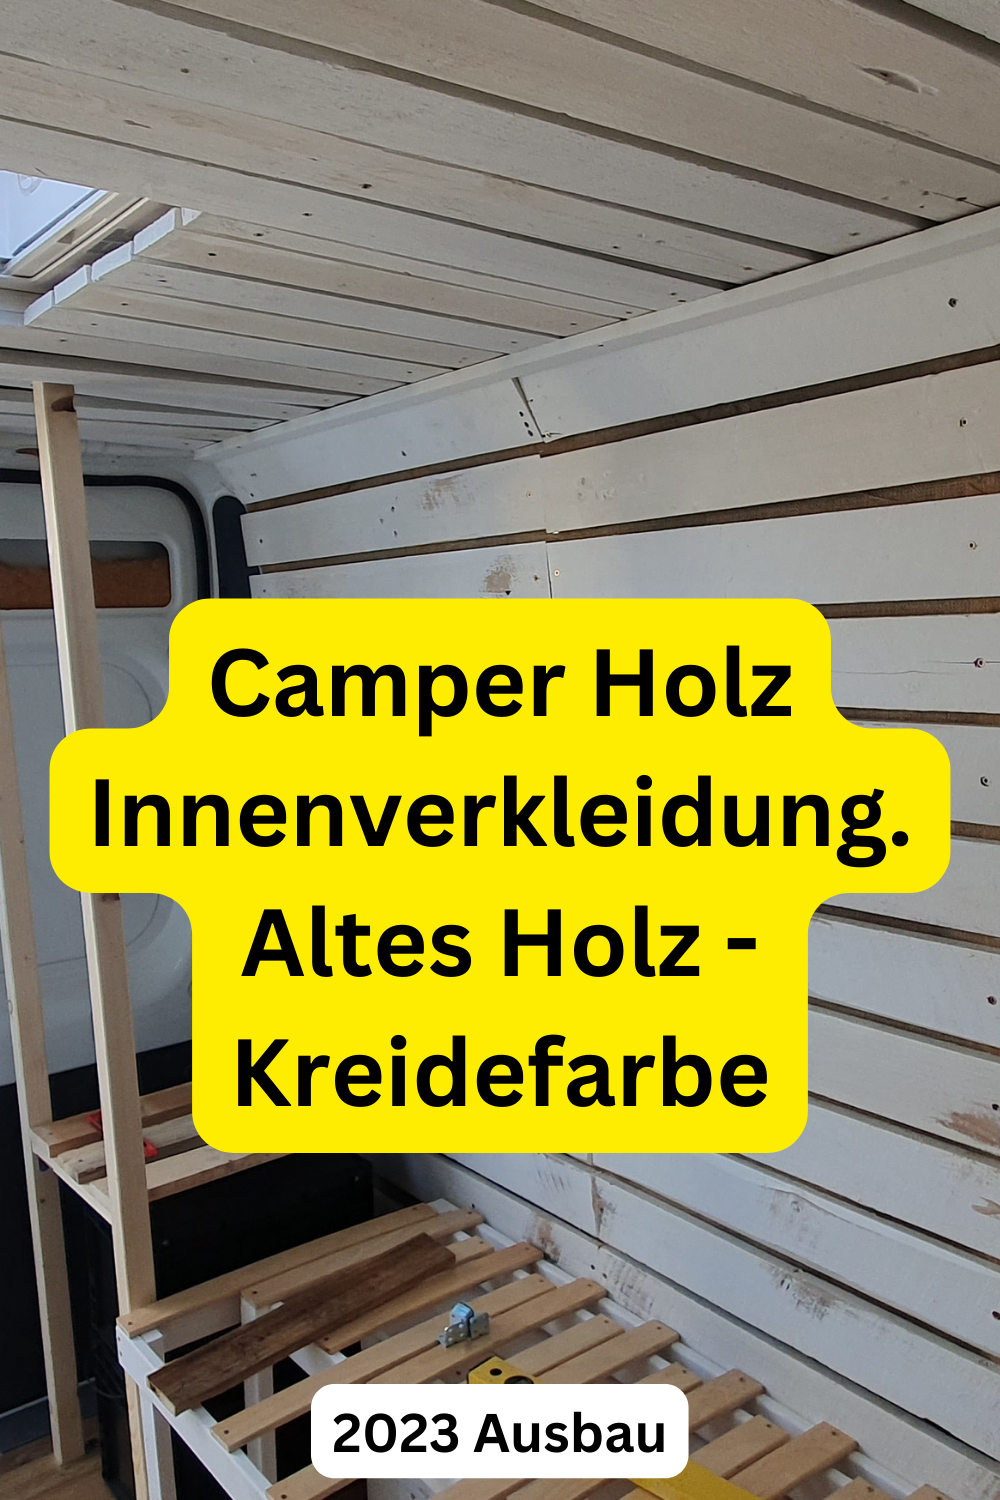 Camper Holz Innenverkleidung. Altes Holz - Kreidefarbe